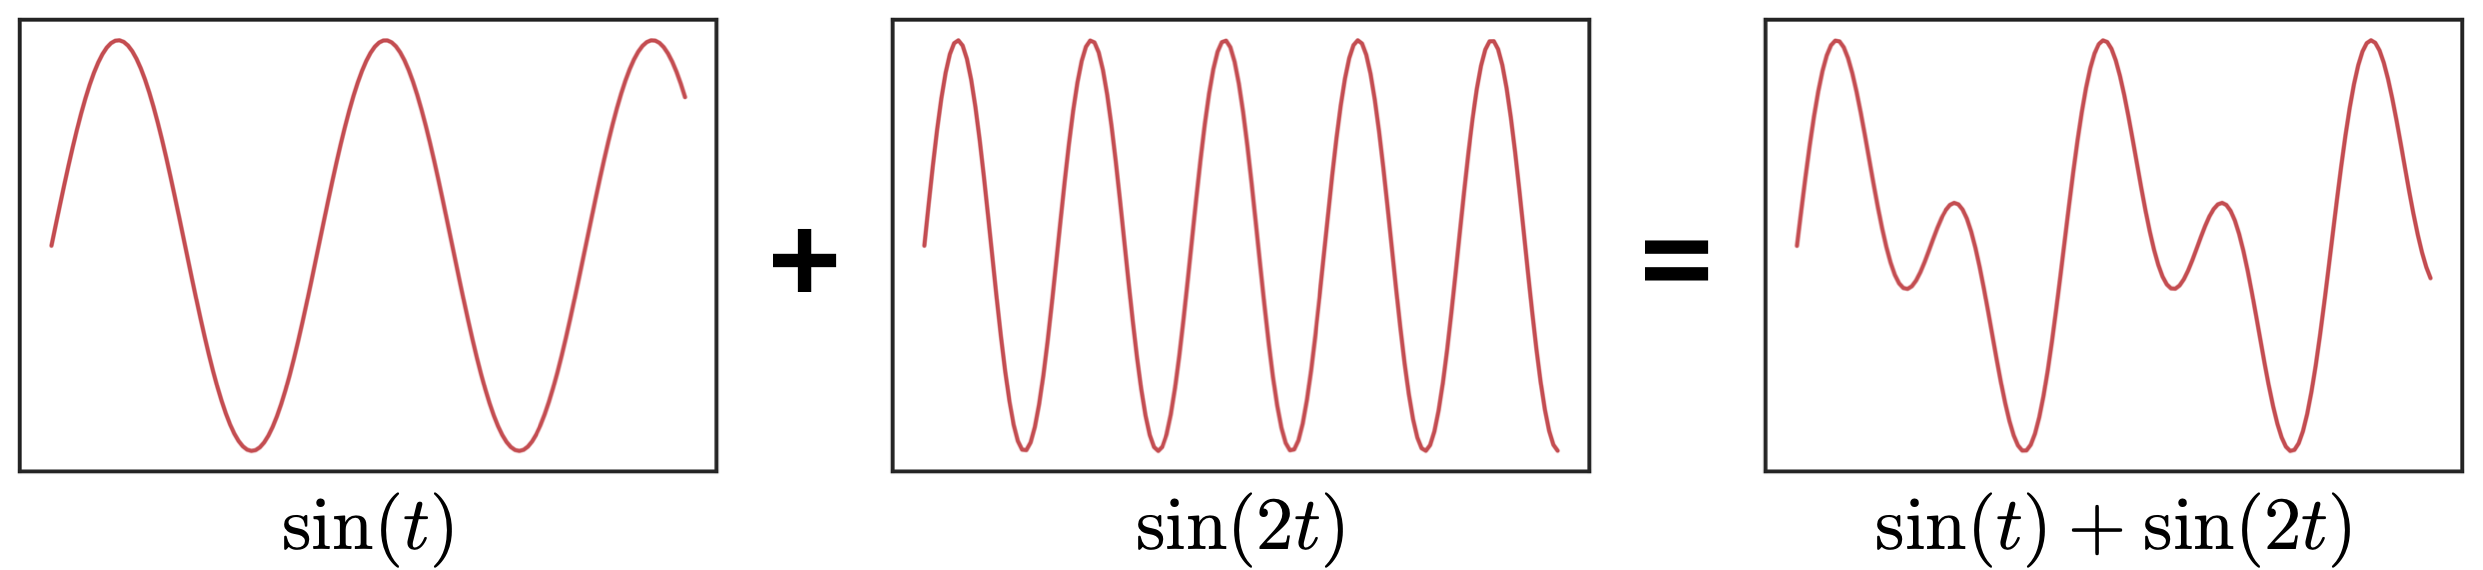 Adding two sine waves together